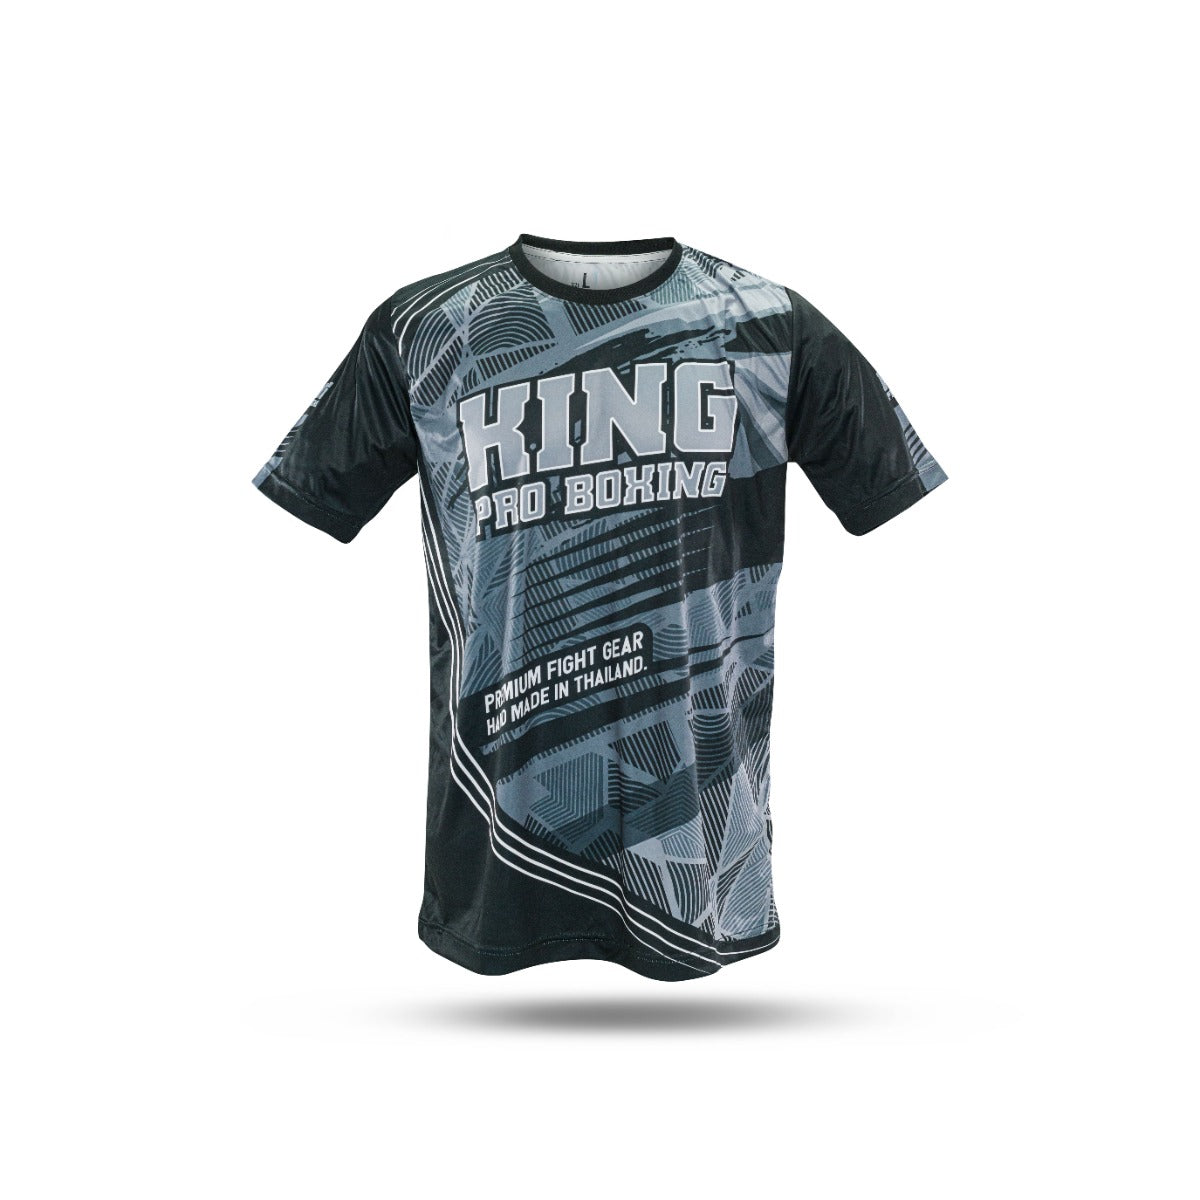 King PRO boxing T-shirt - FLAG TEE 1